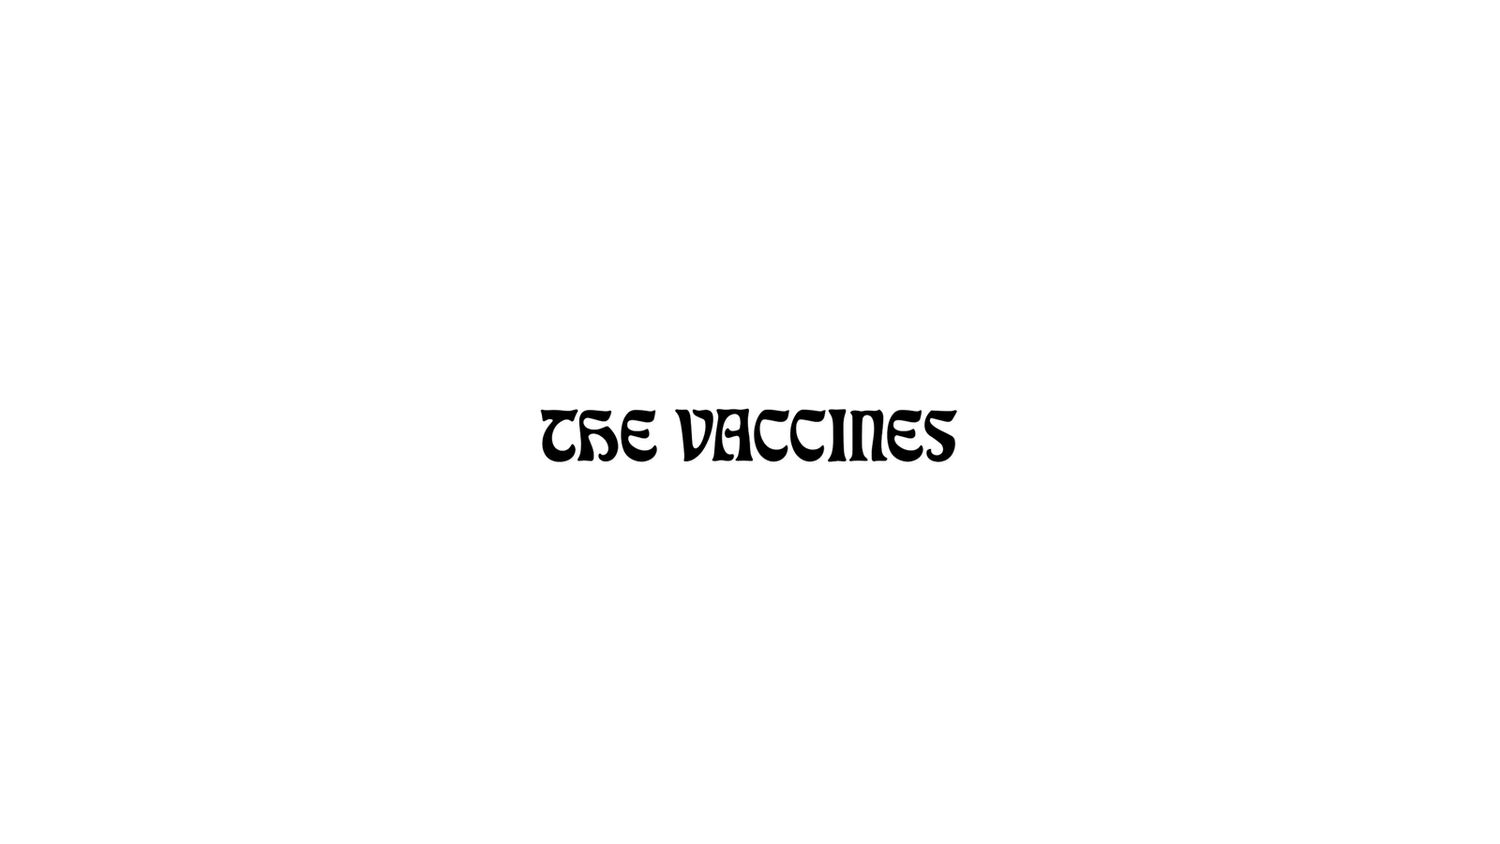 The Vaccines